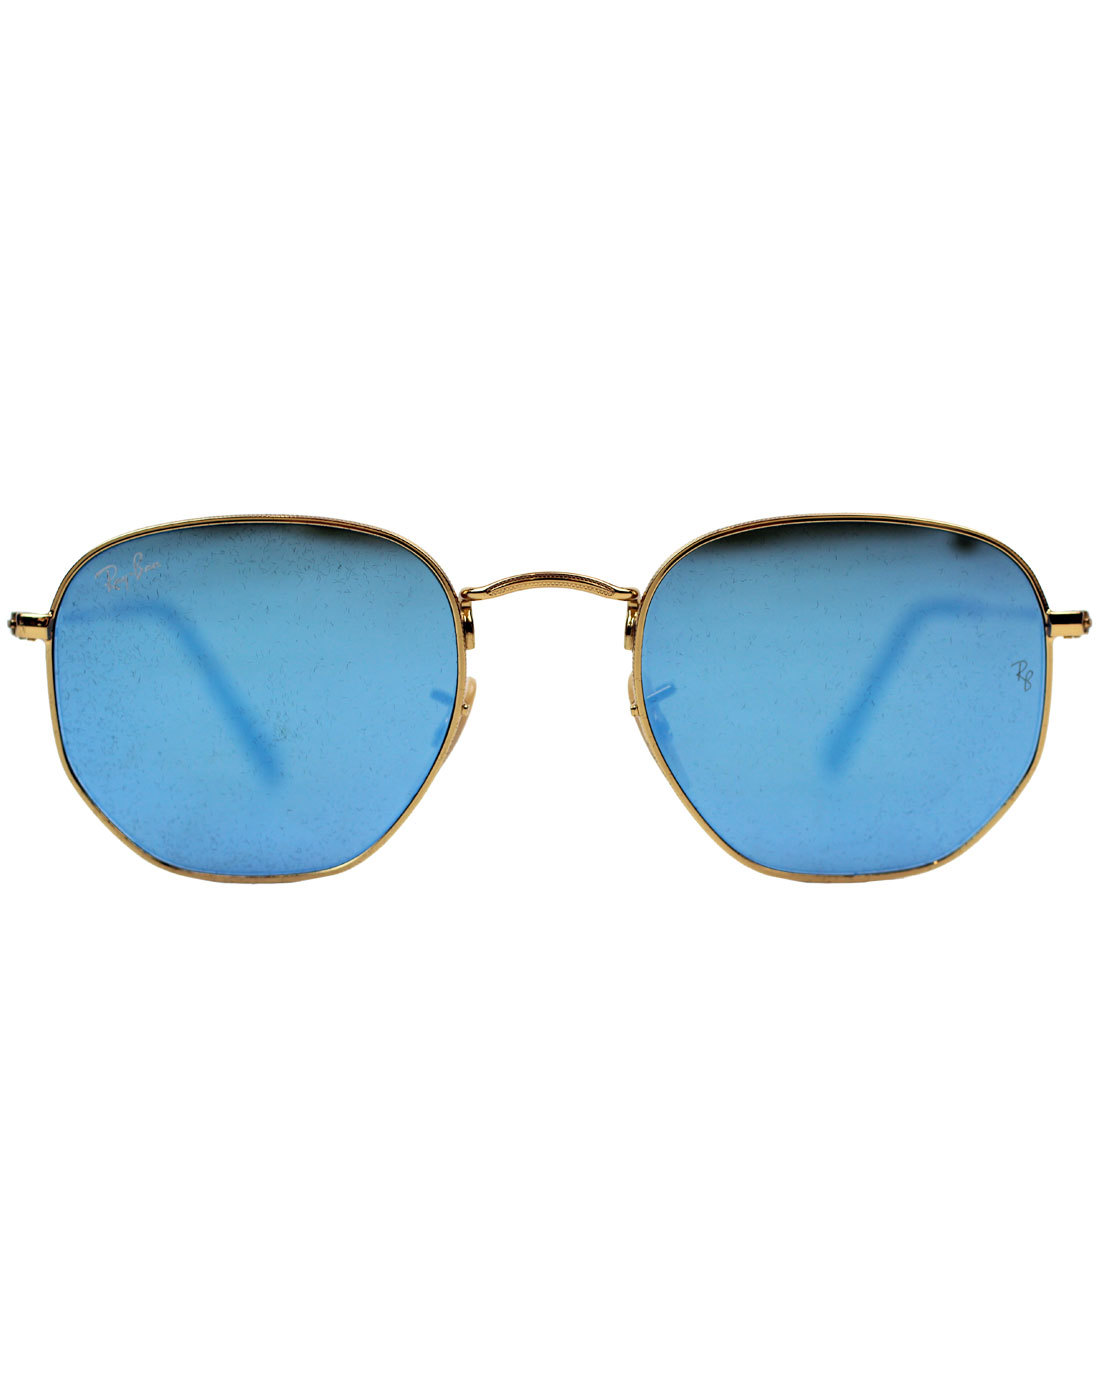 RAY-BAN Hexagonal Round Retro Mod Blue Flash Mirror Sunglasses